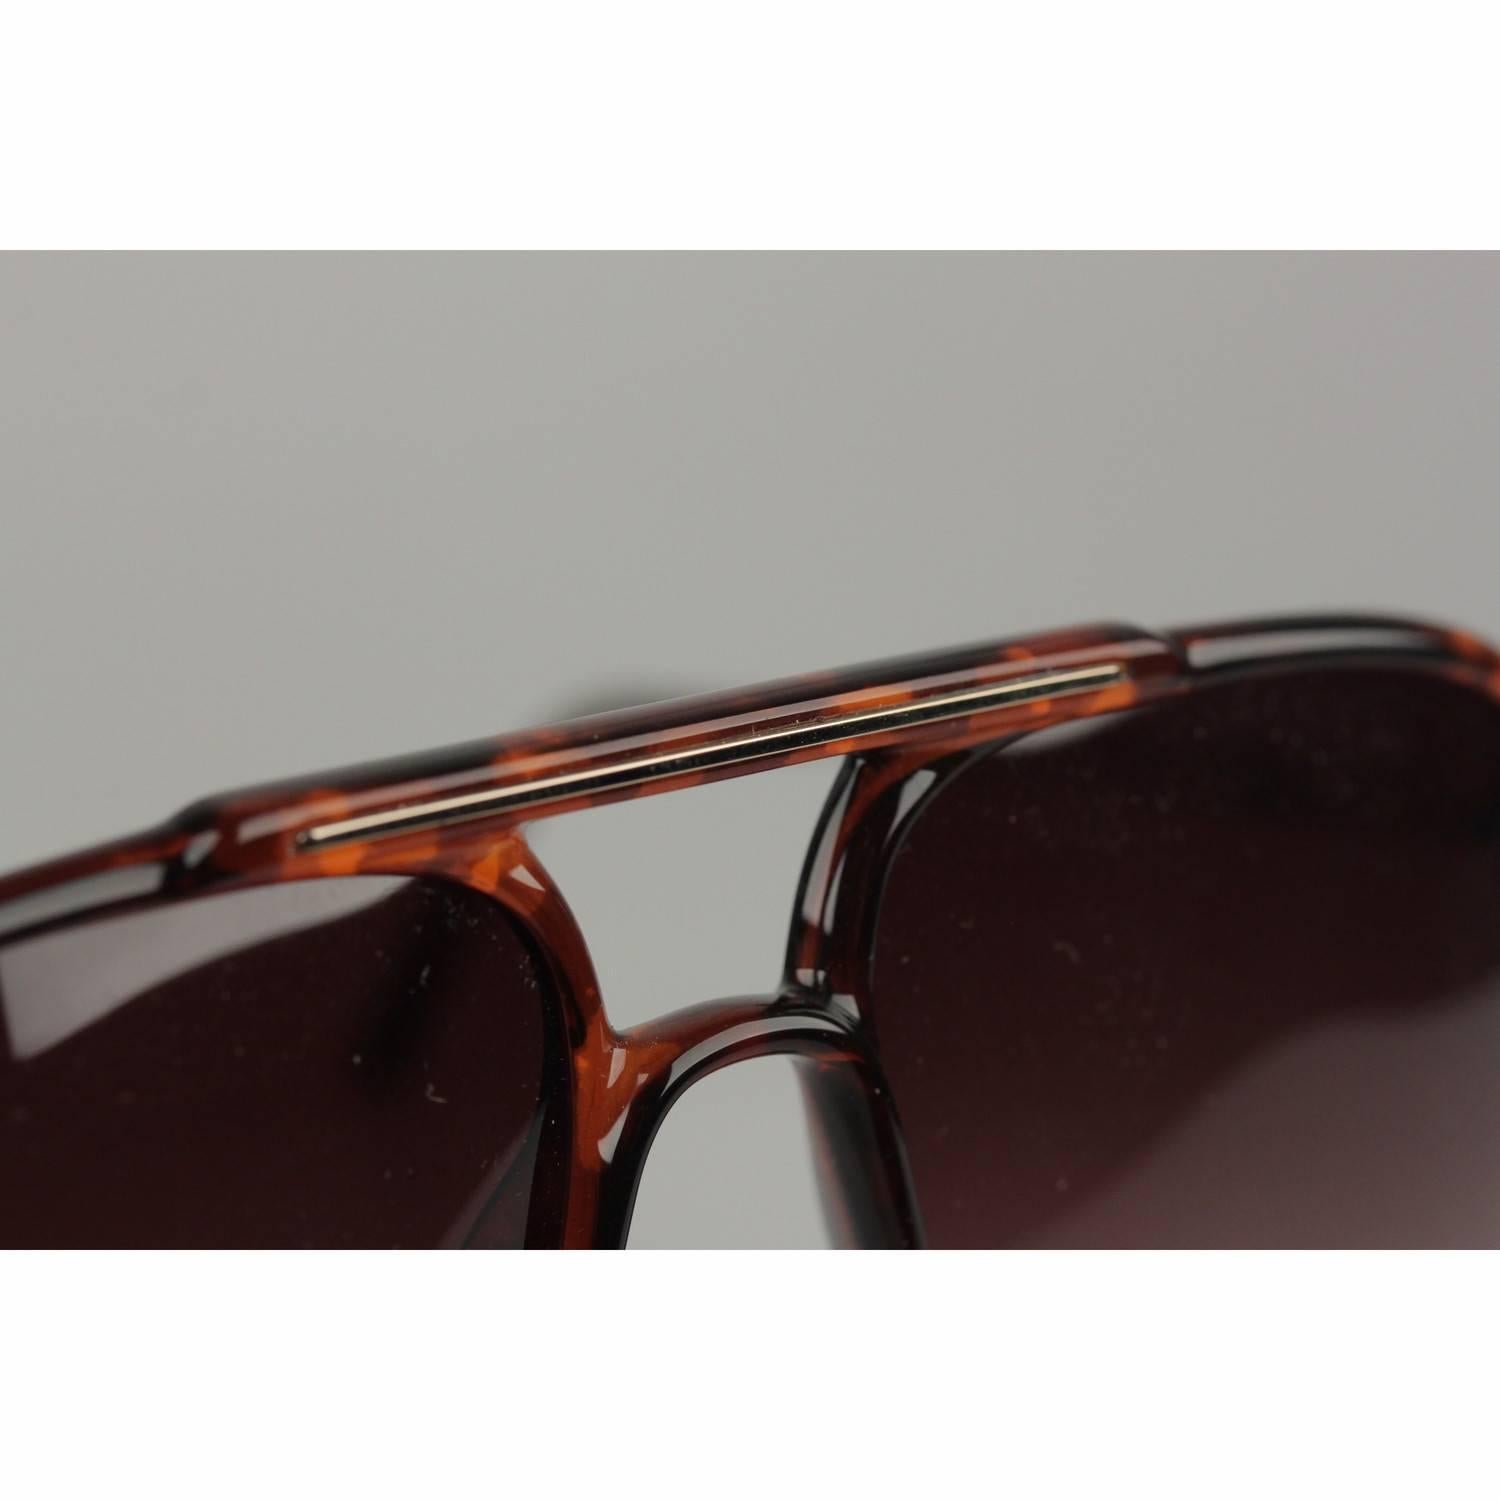 Carrera Vintage Brown Sunglasses 5300E VARIO  2